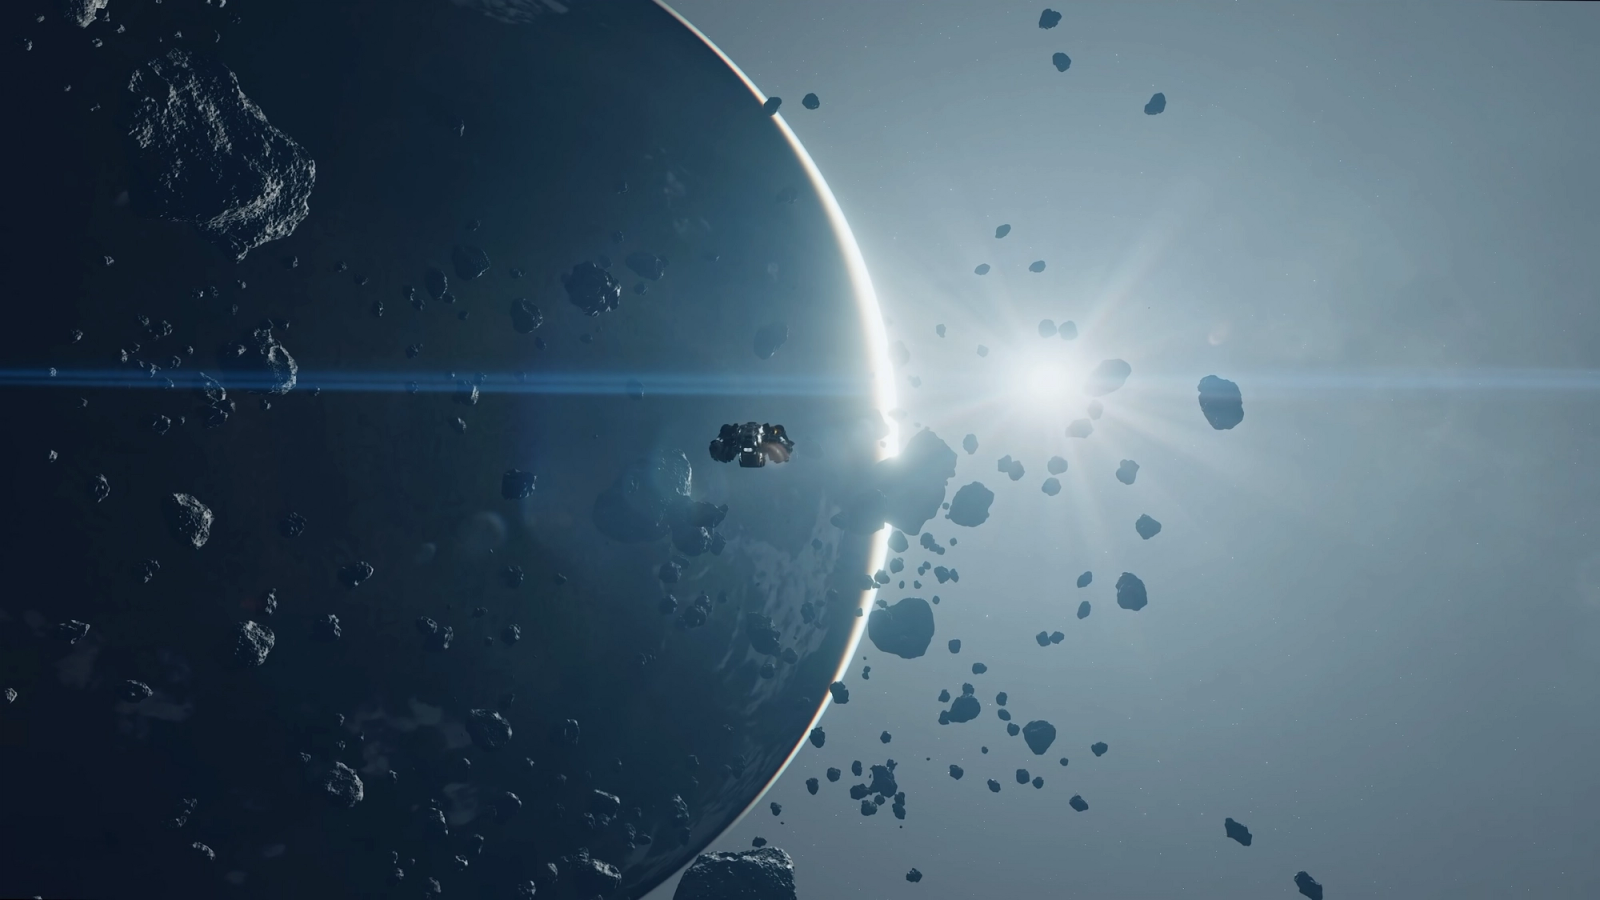 A spaceship flies through a debris field, a planet in the background. 